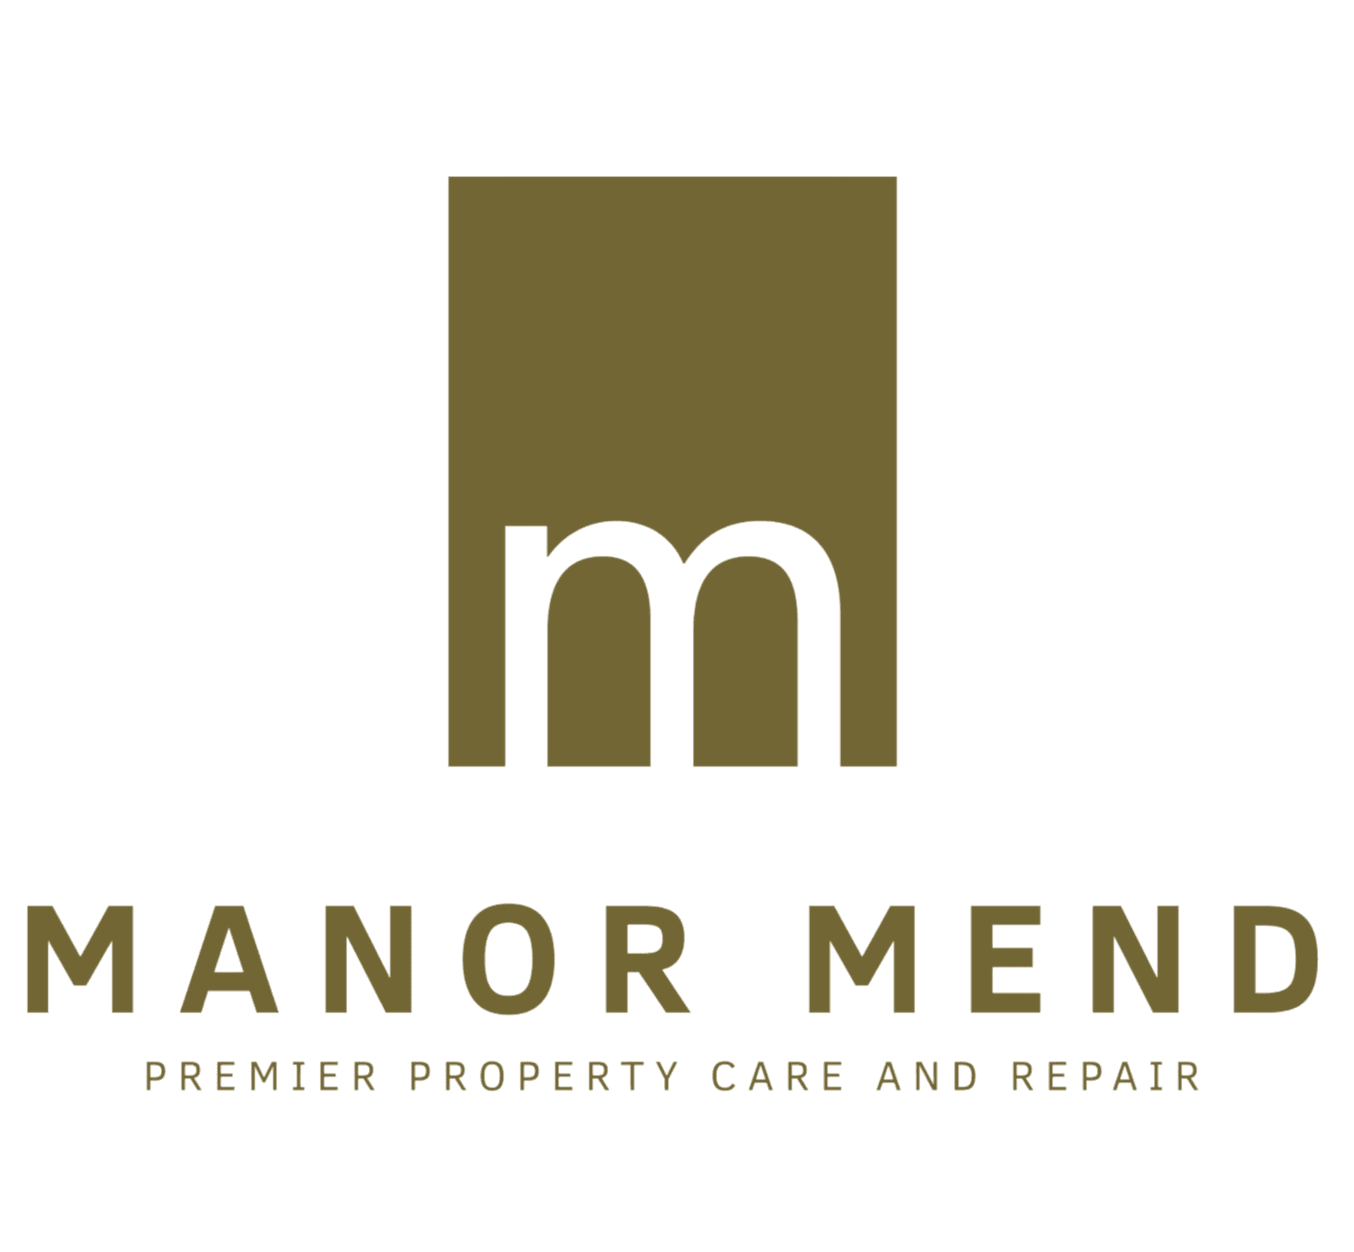 Manor Mend